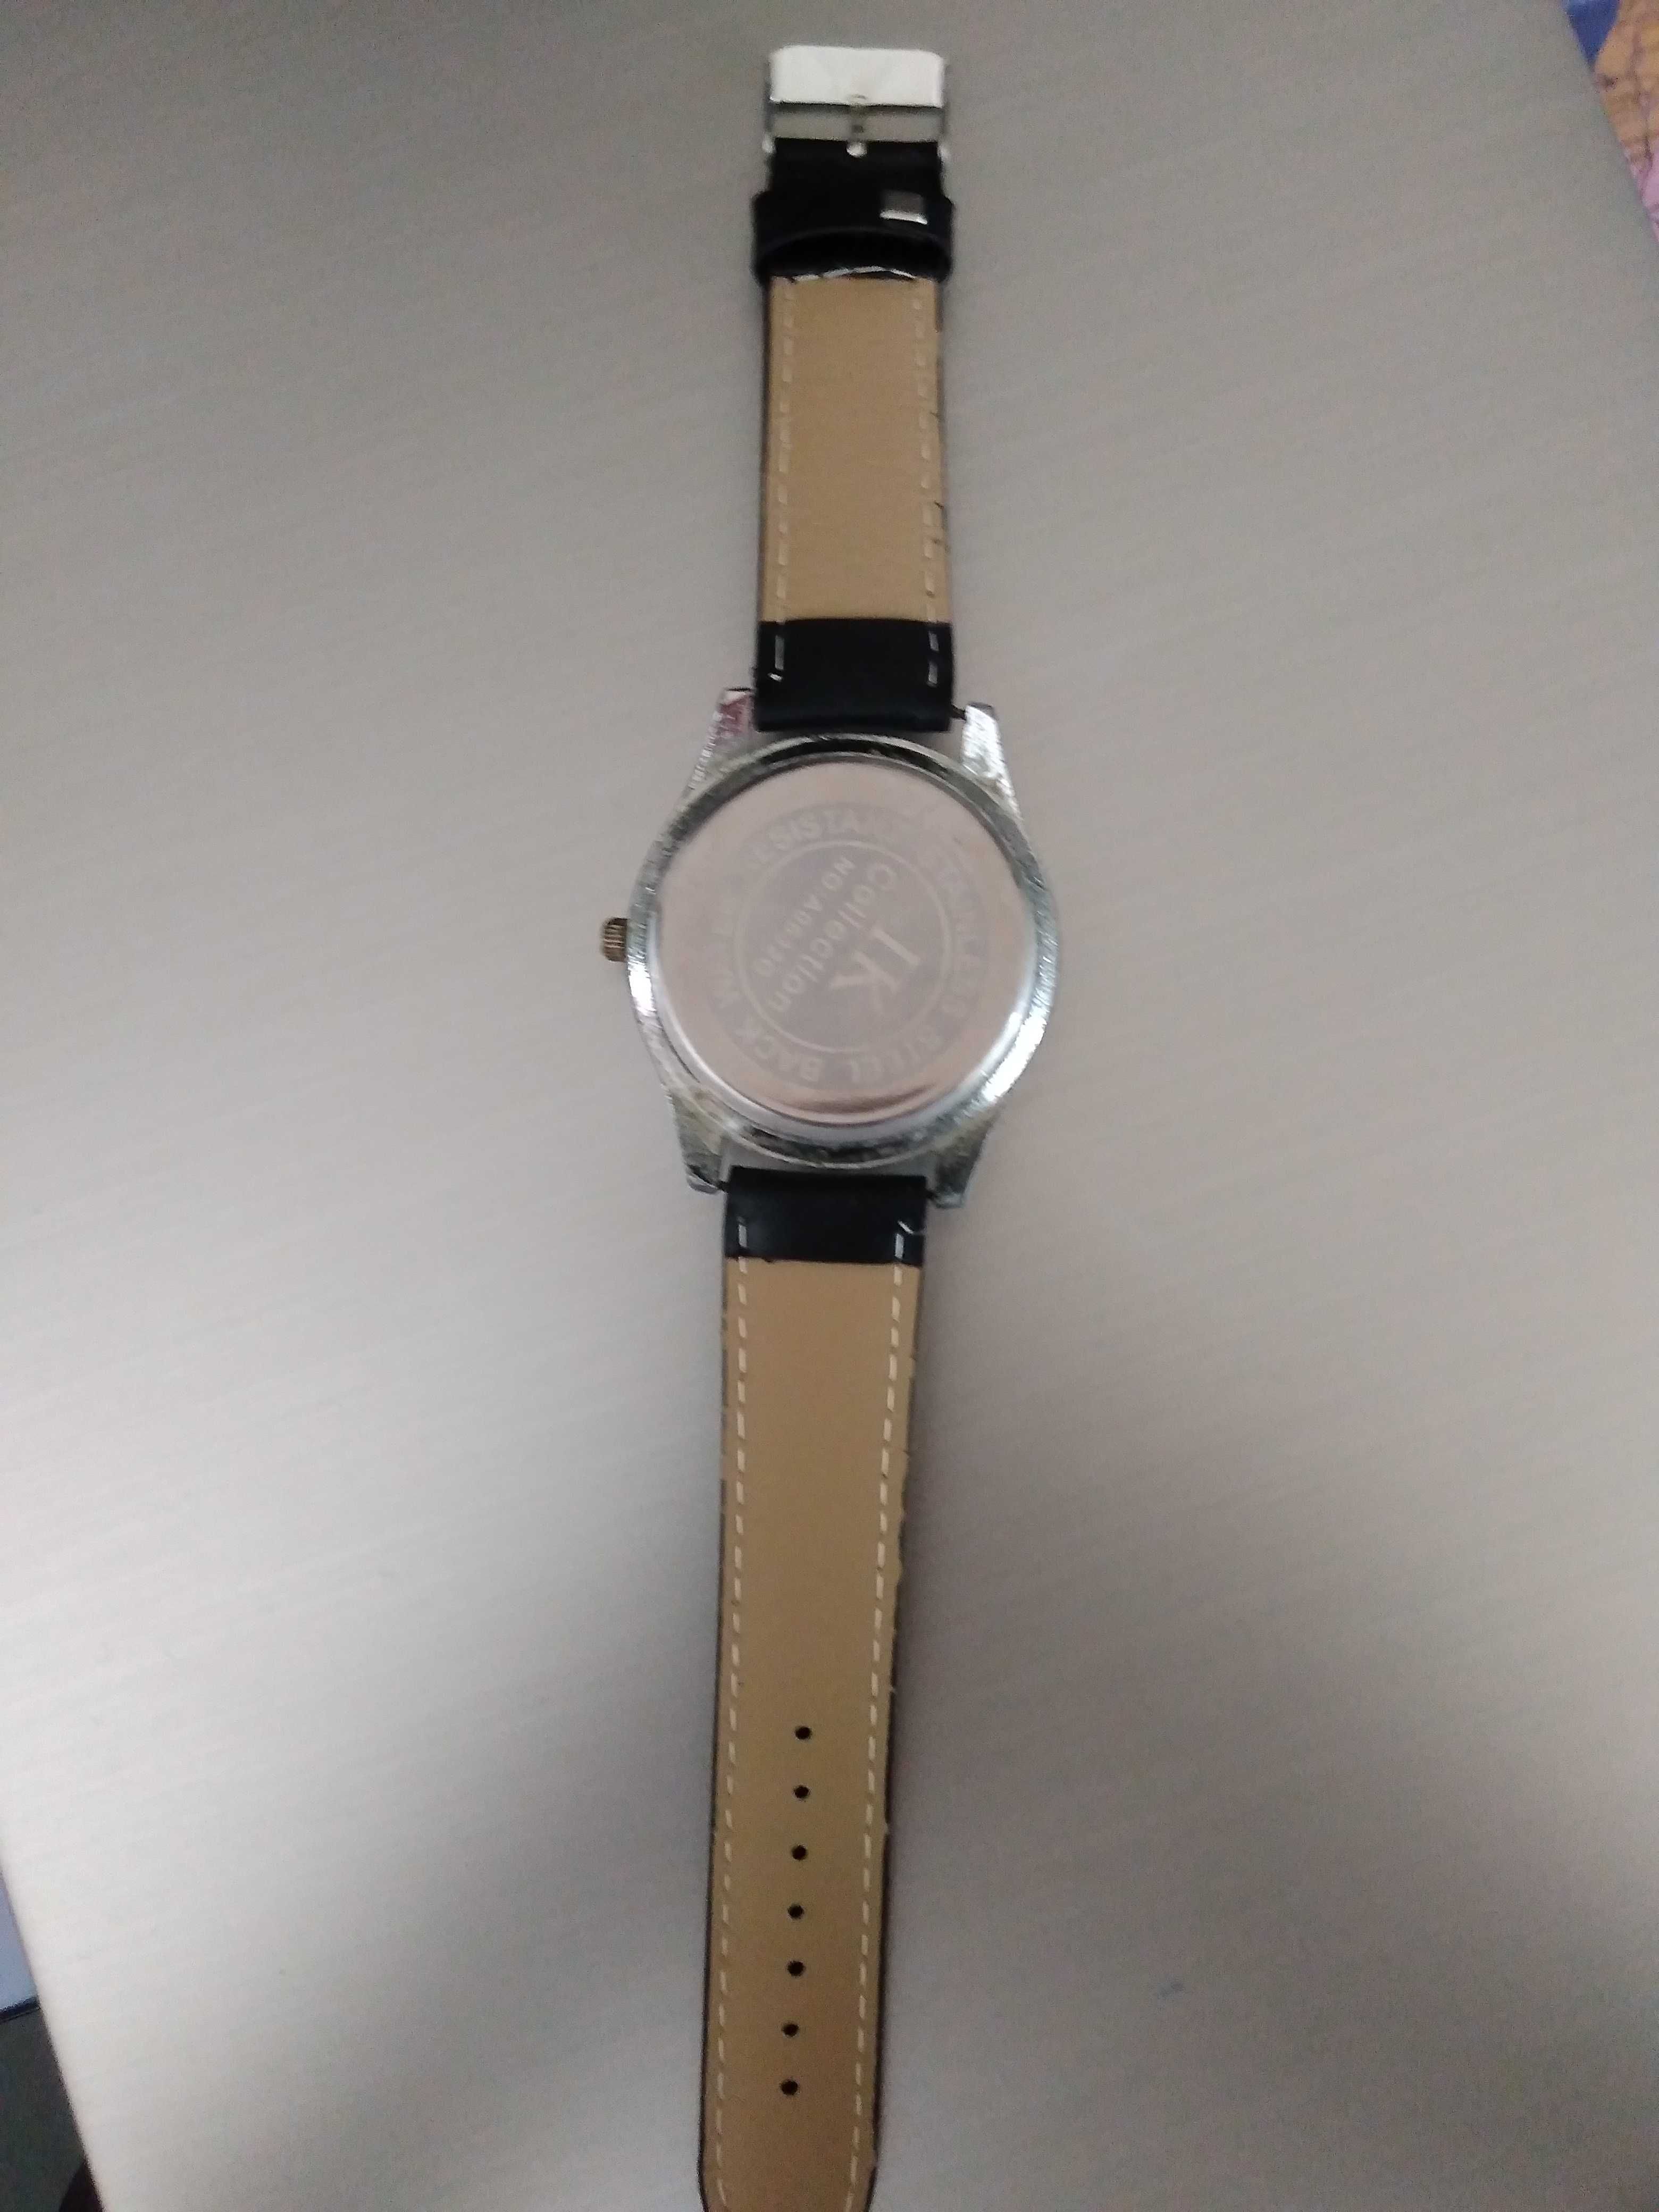 Relógio IK Collection